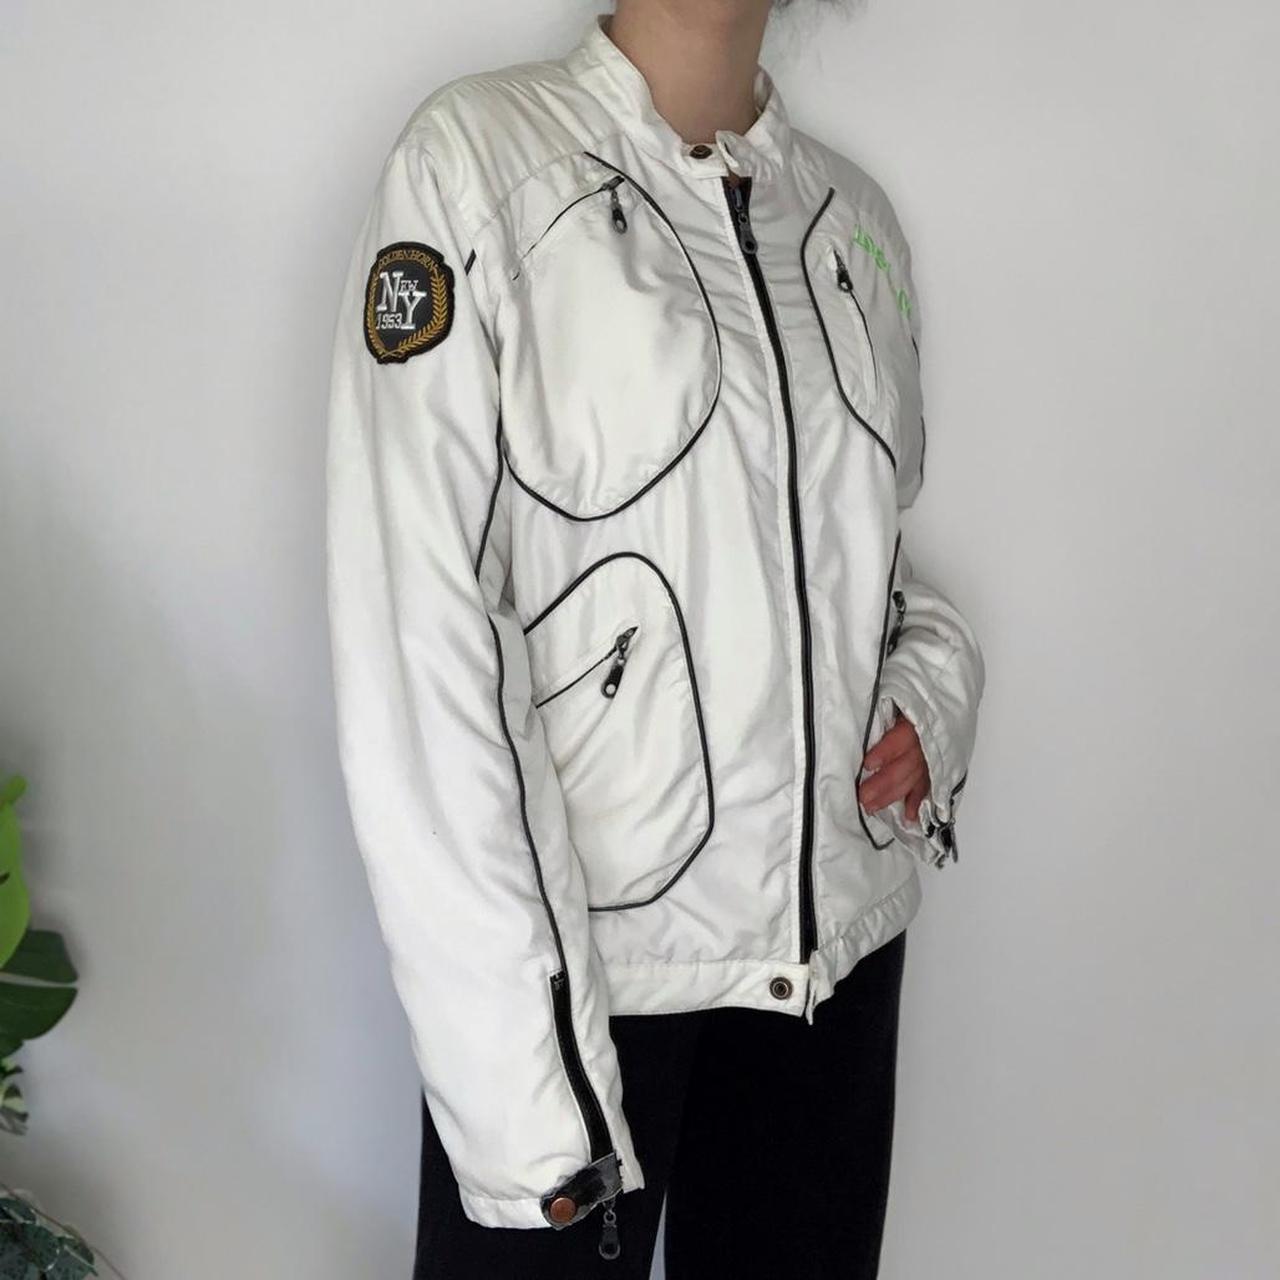 Vintage 90s Replay white zip-up racing jacket